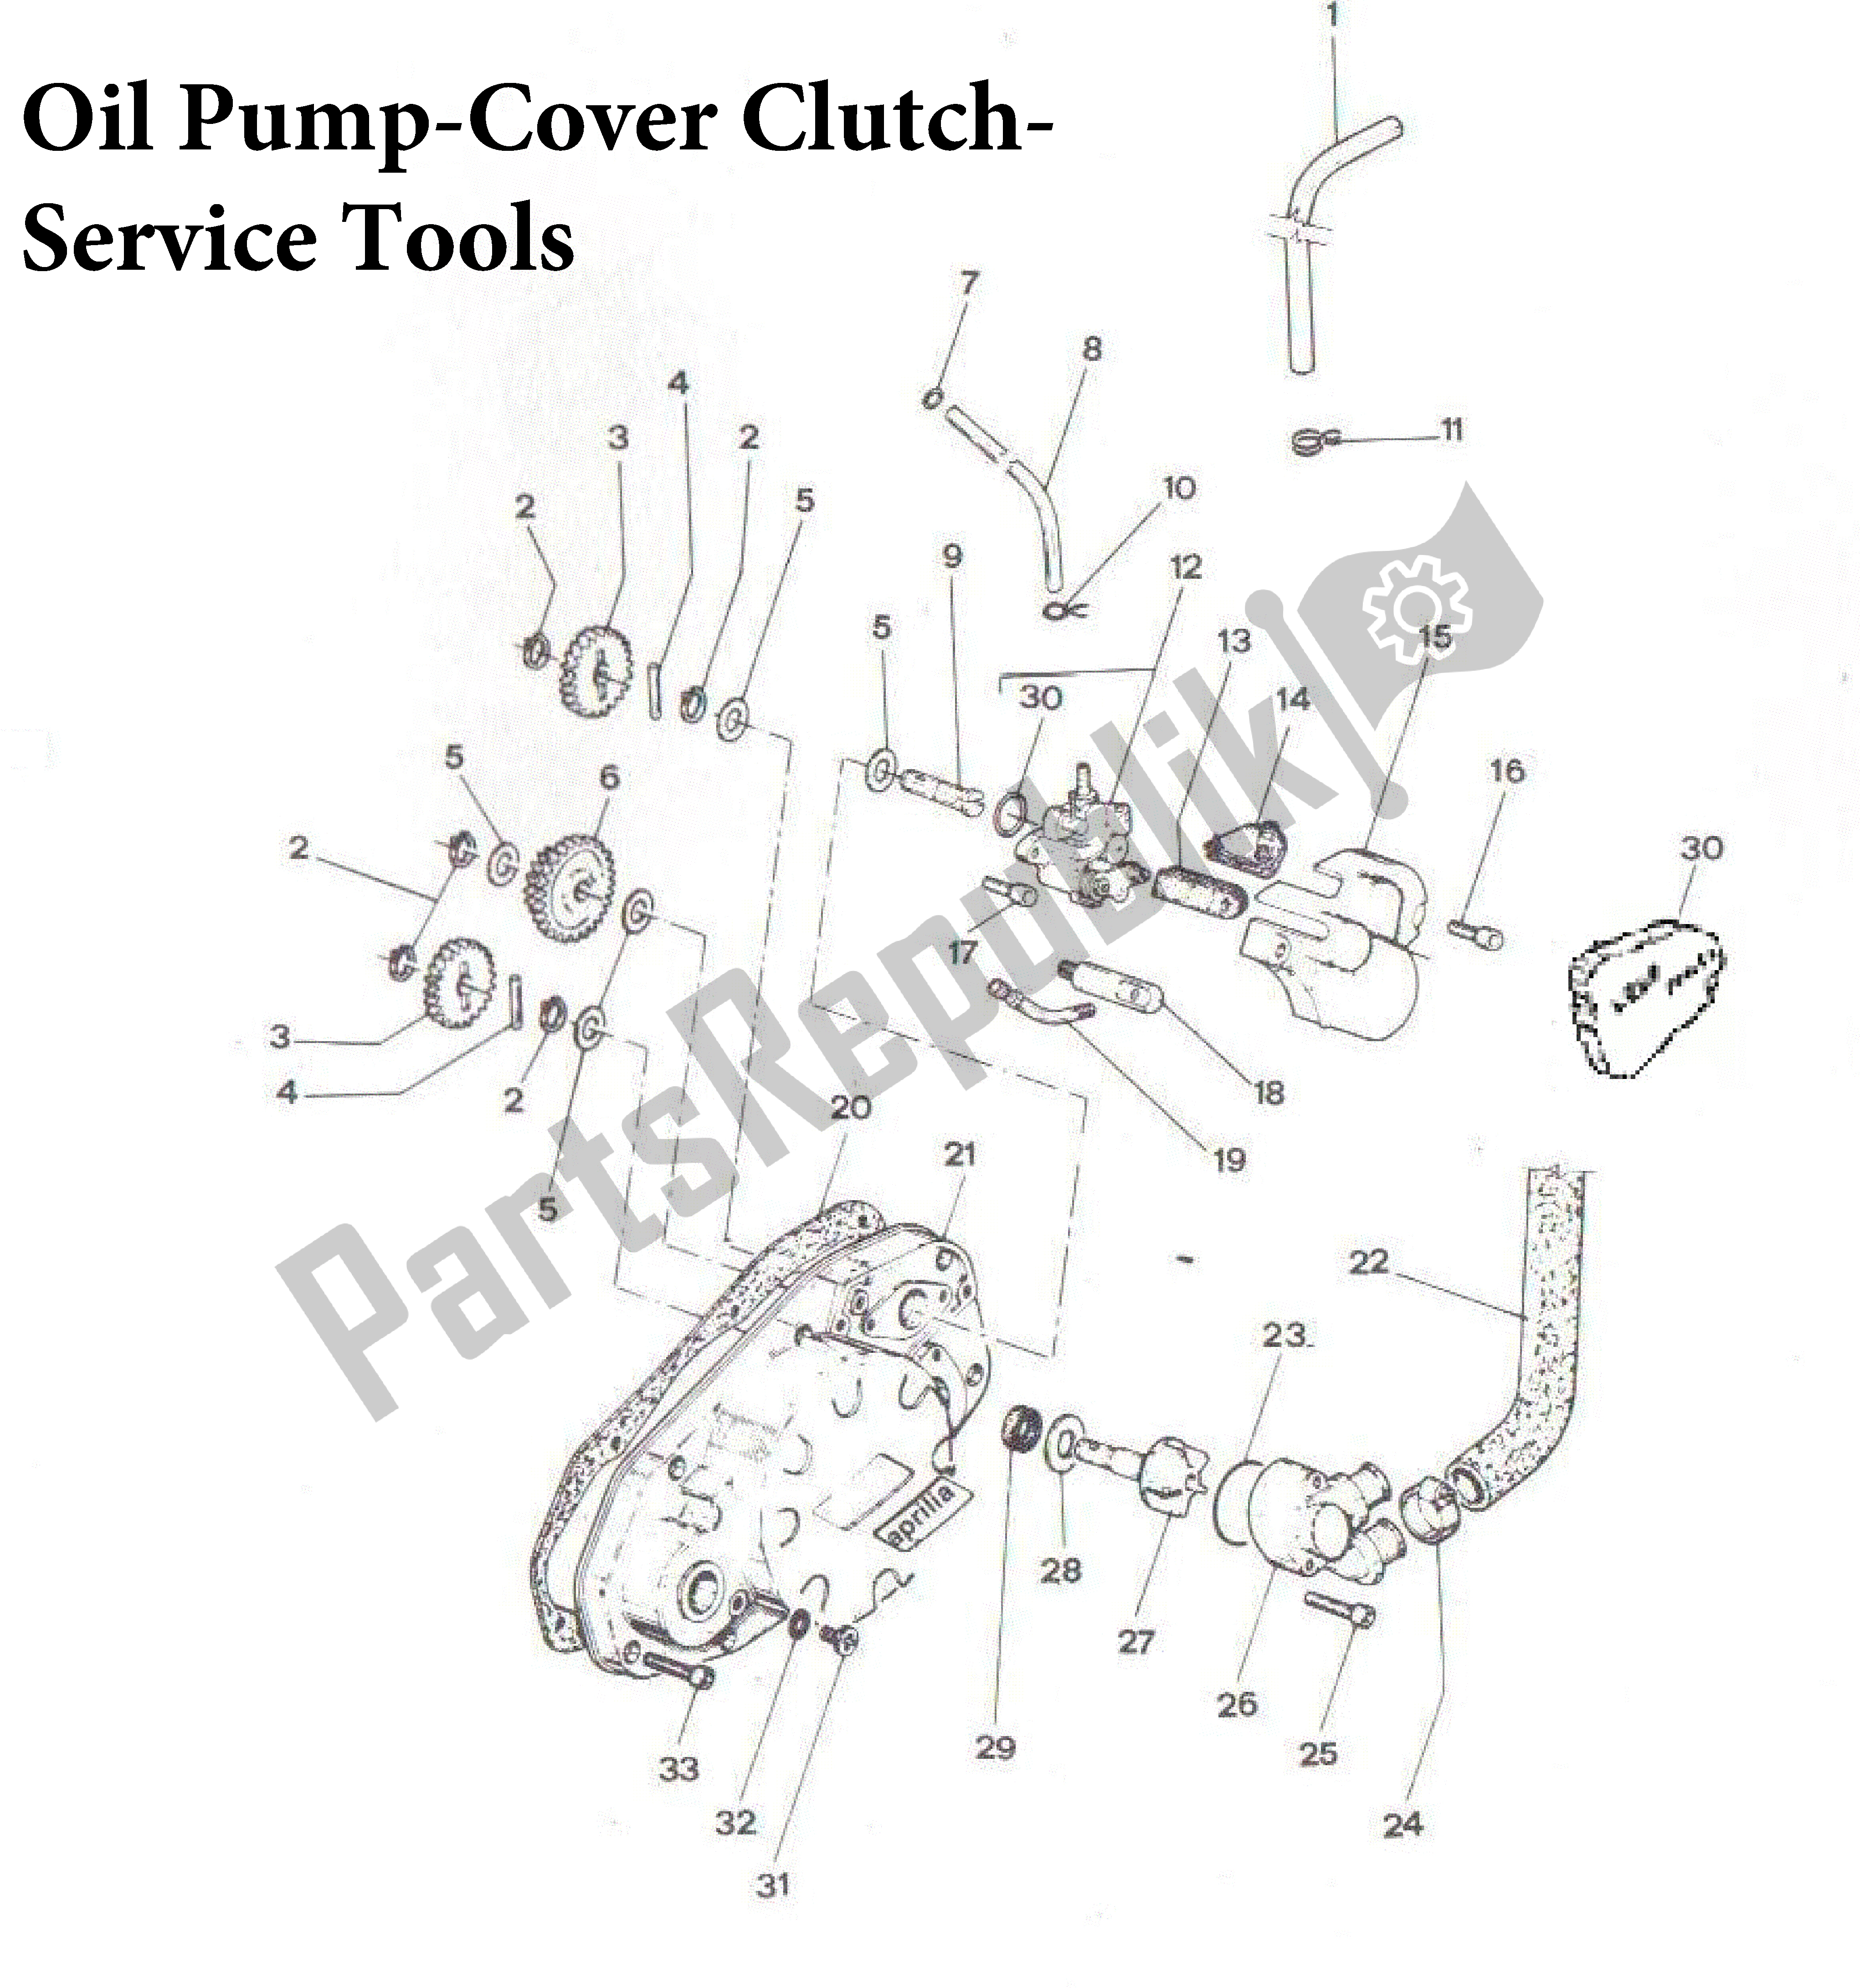 All parts for the Oil Pump-cover Clutch-service Tools of the Aprilia Tuareg 50 1990 - 1992